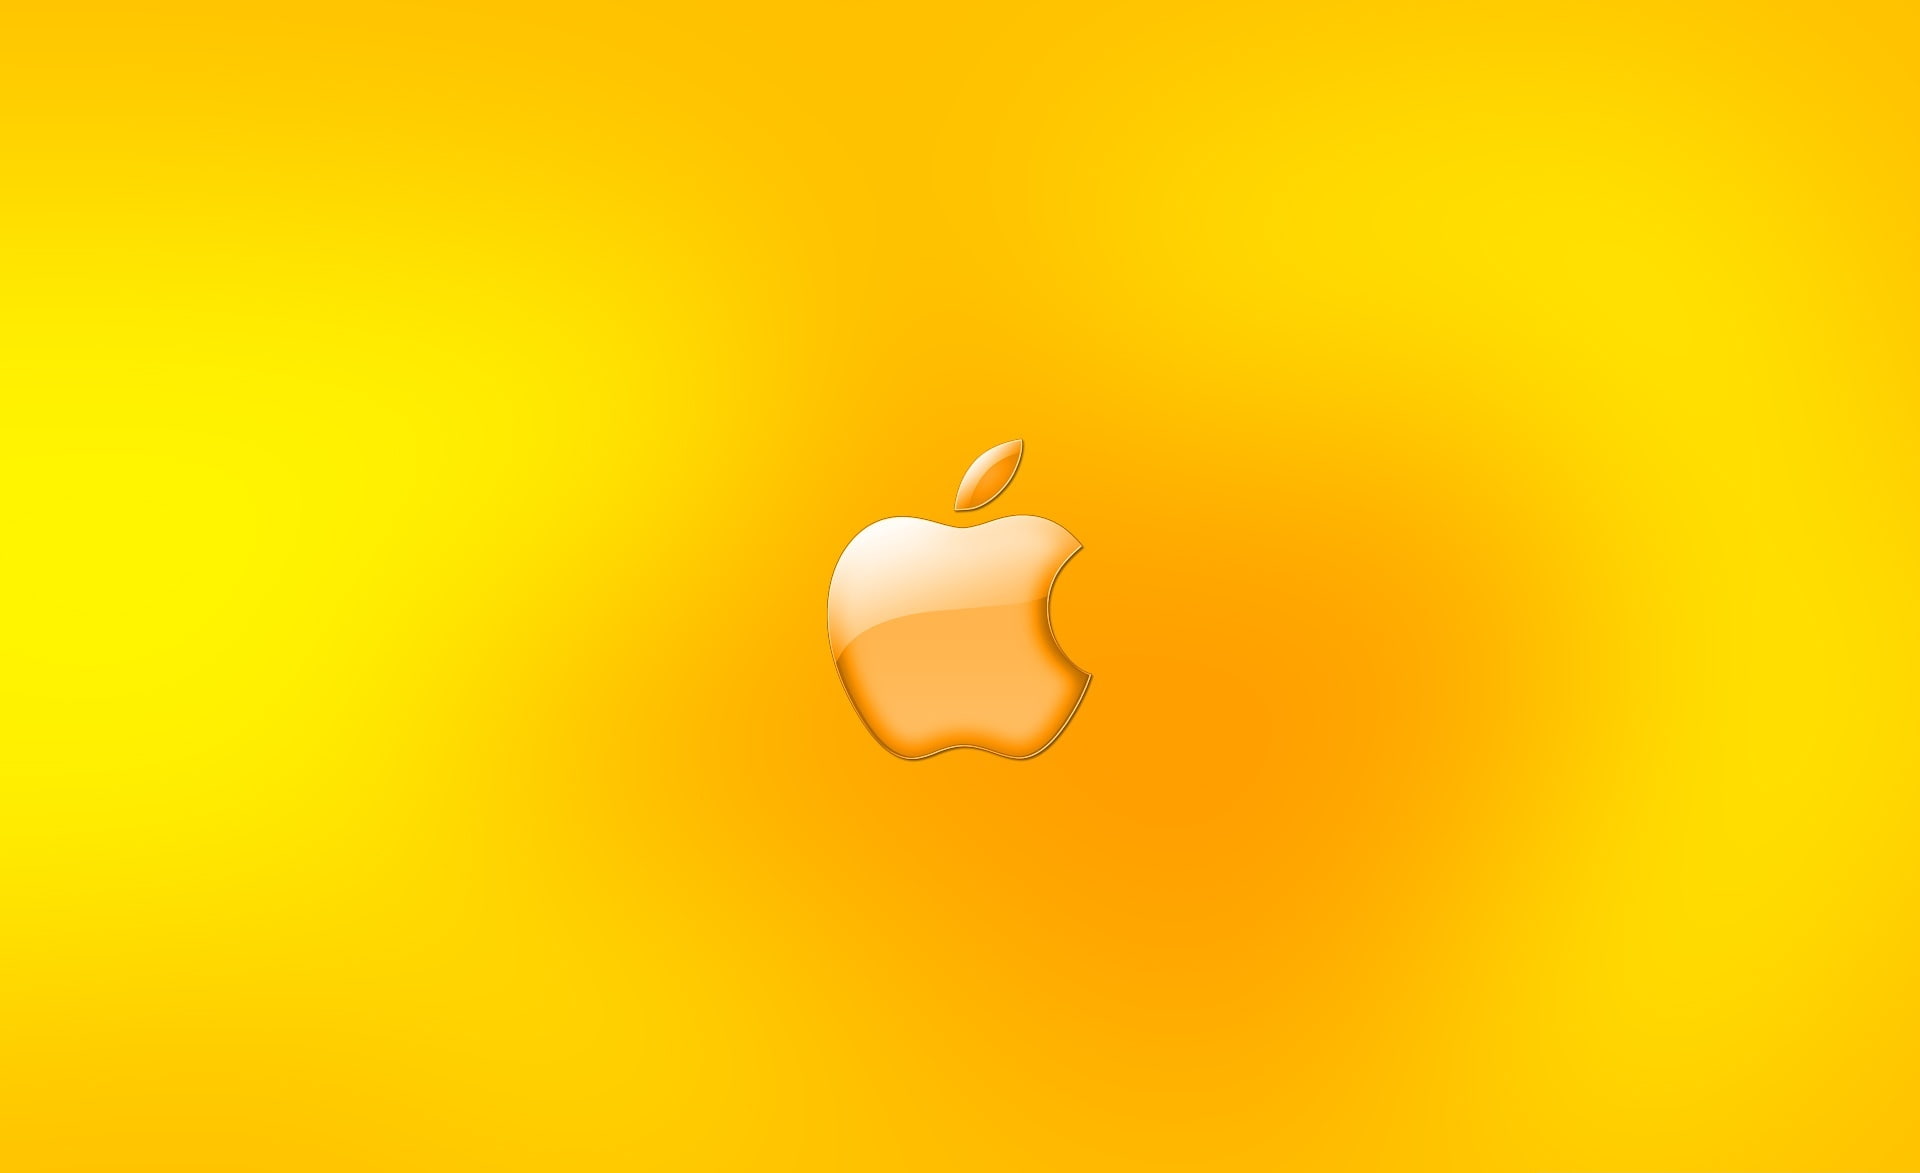 Apple Logo Gold, yellow Apple logo wallpaper, Computers, Mac